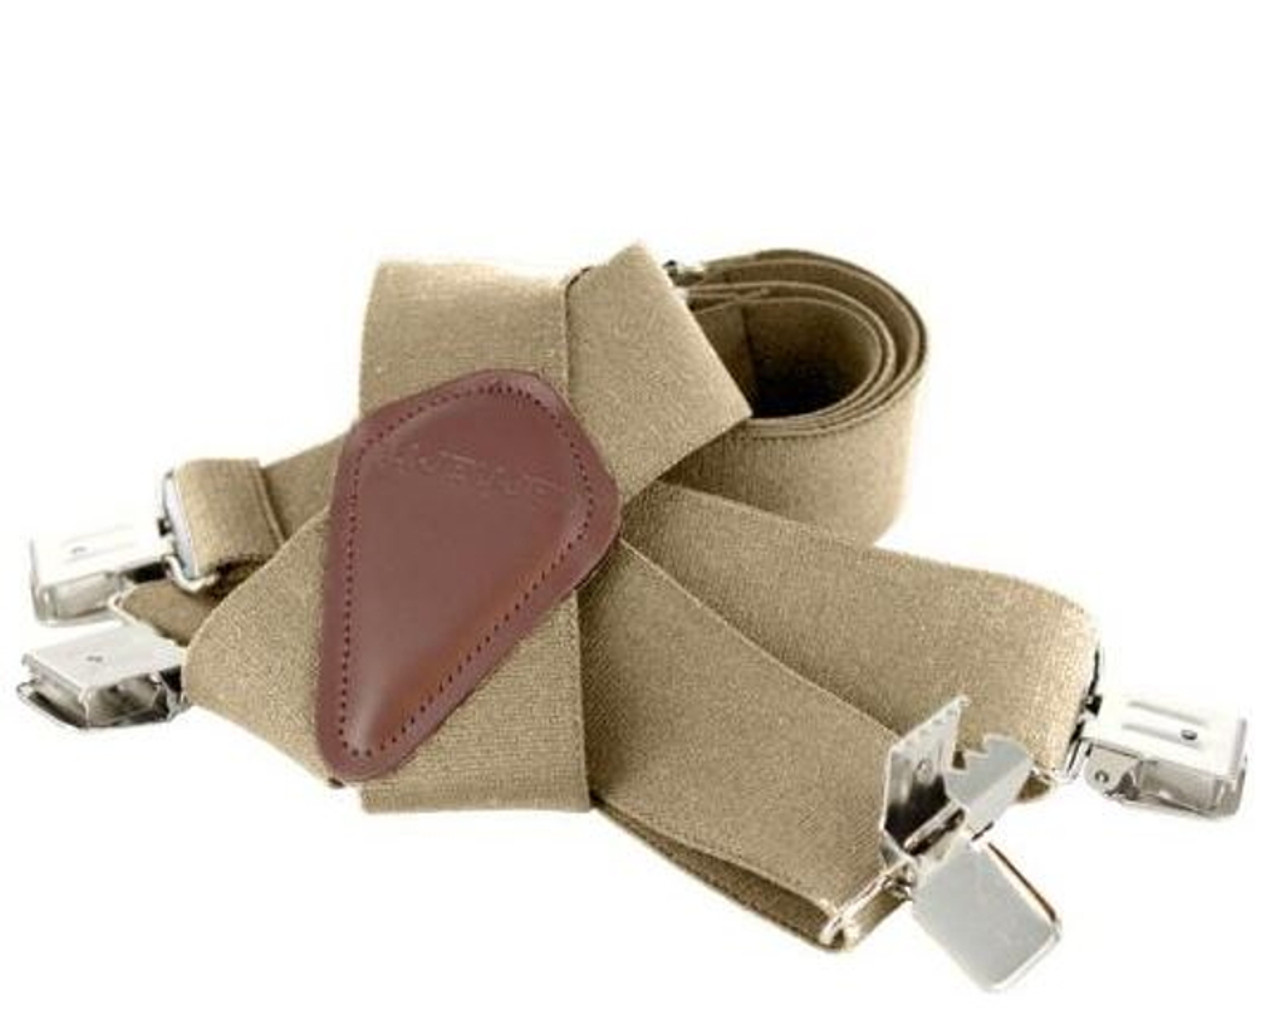 Carhartt Men's Utility Suspender Leather / Metal